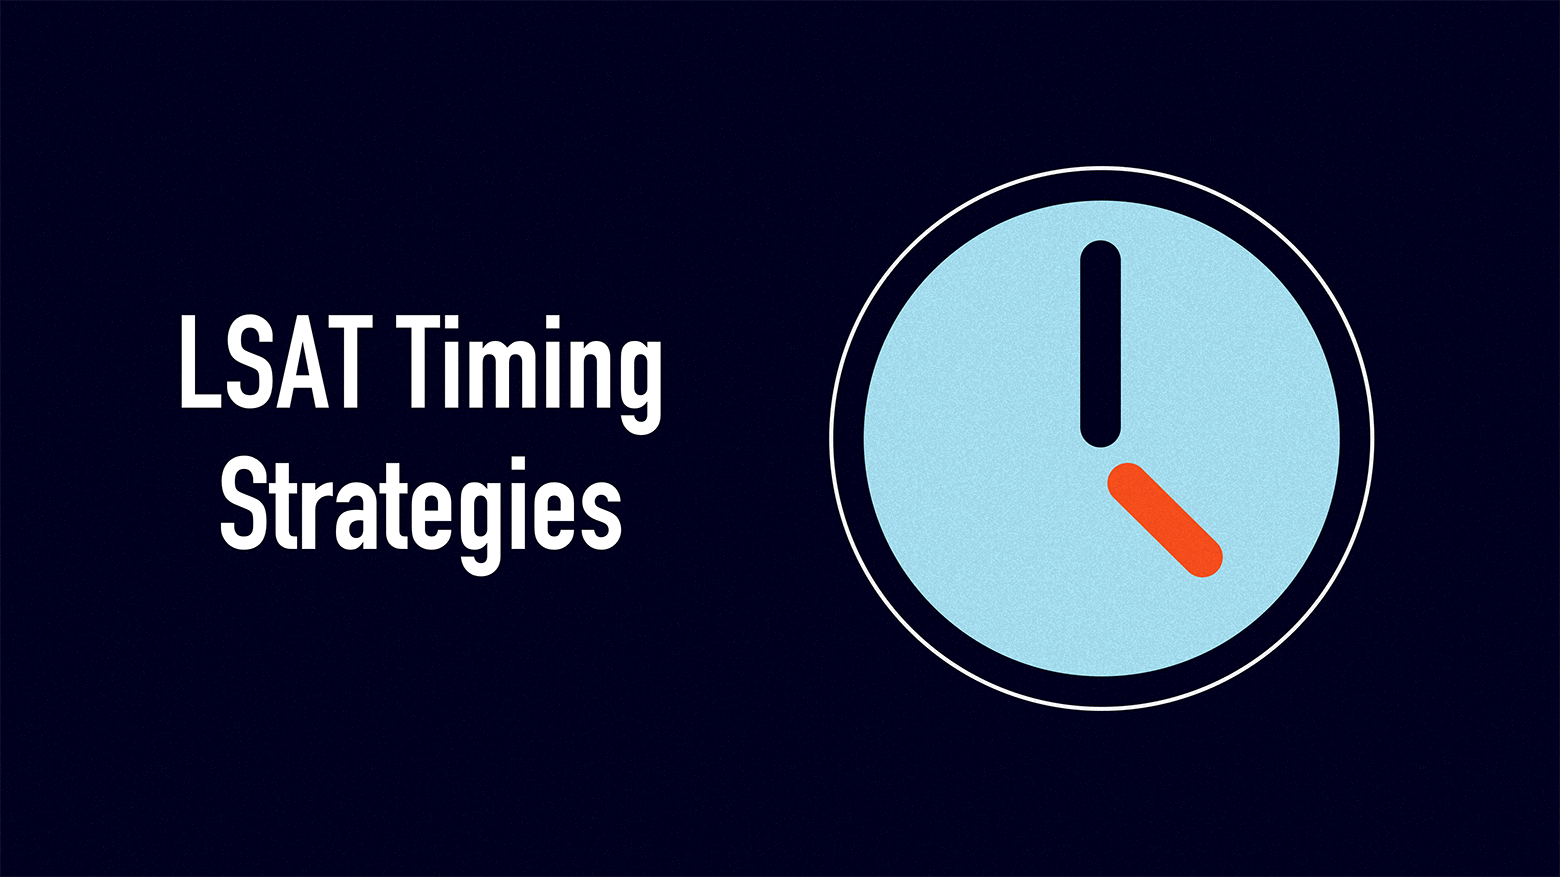 LSAT Timing Strategies Infographic